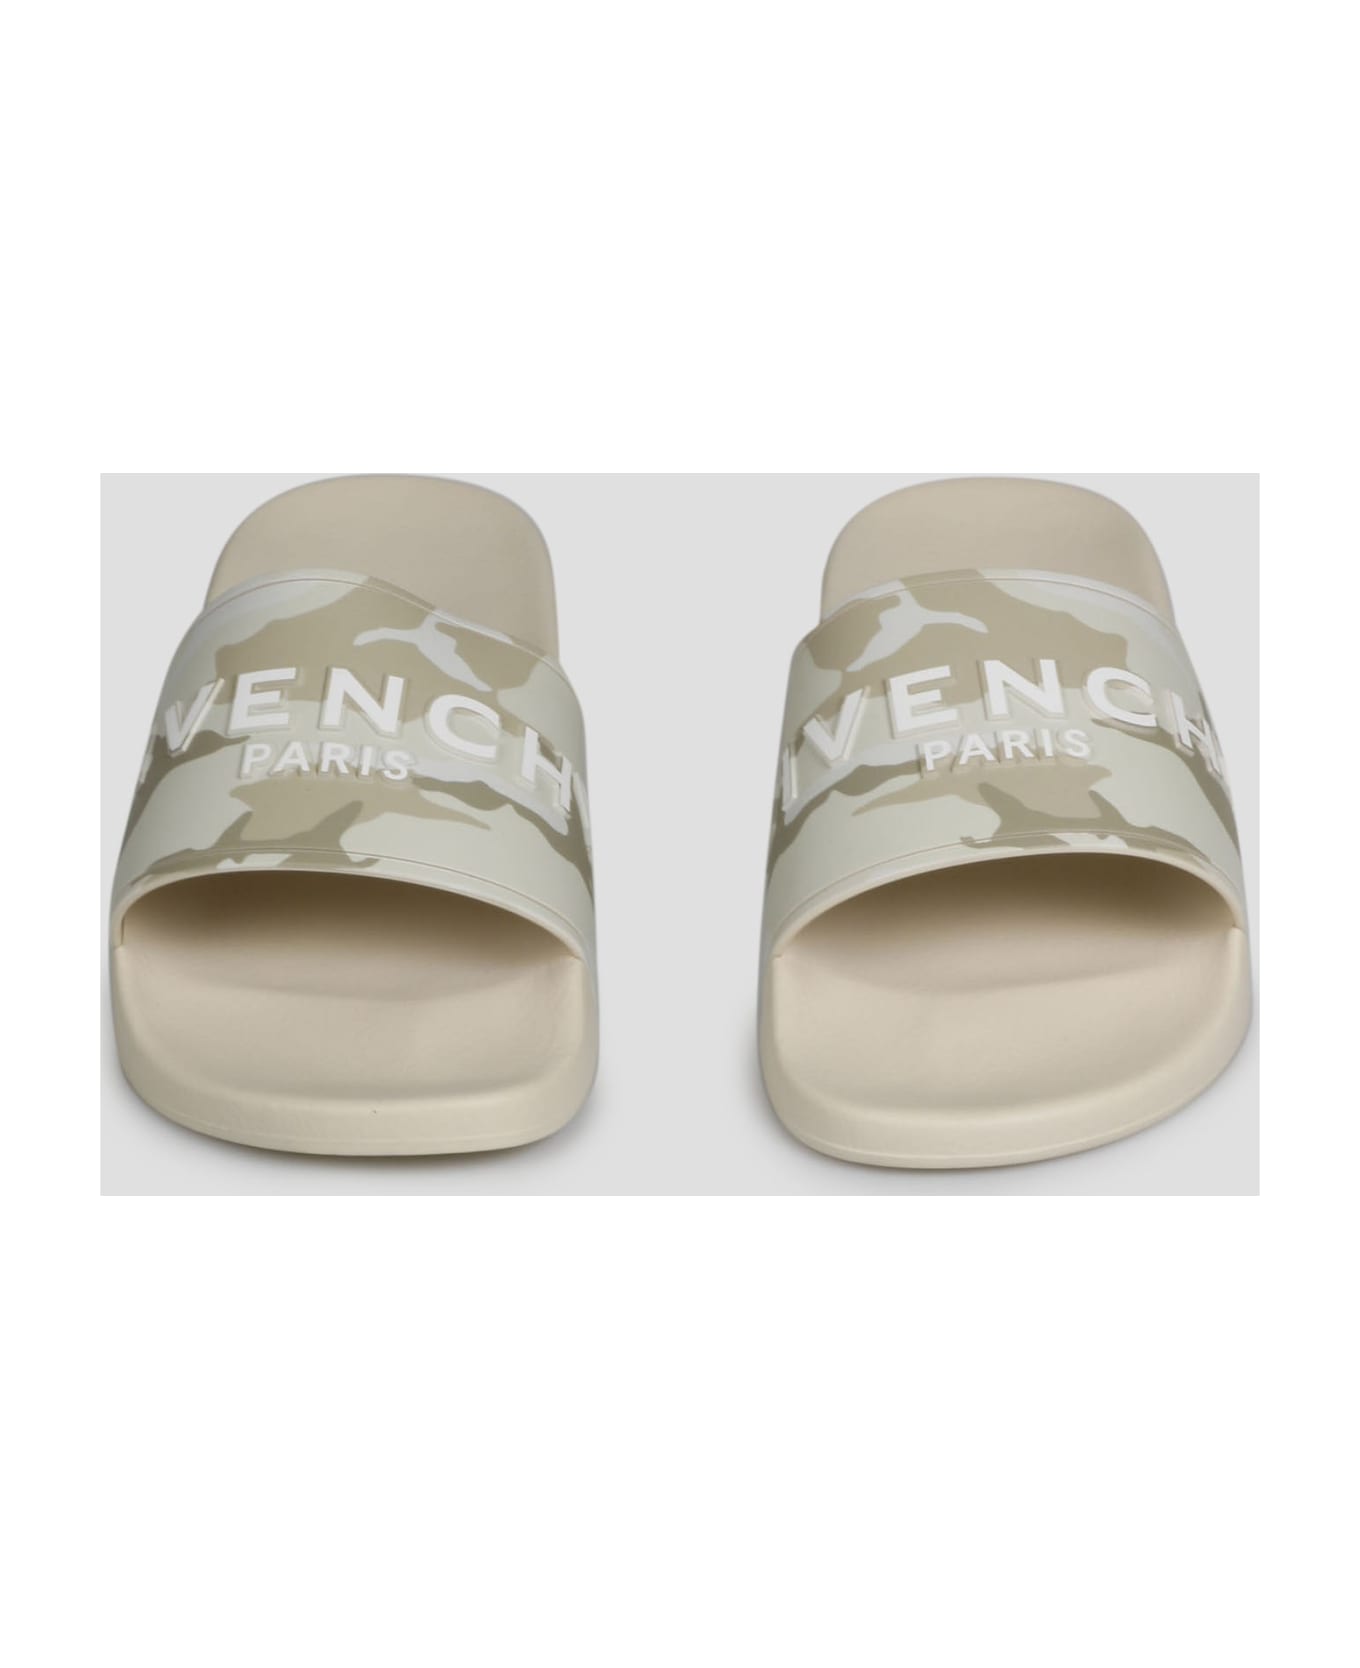 Givenchy Logo Slide Sandals - Lebron 7 Retro "China Moon" sneakers